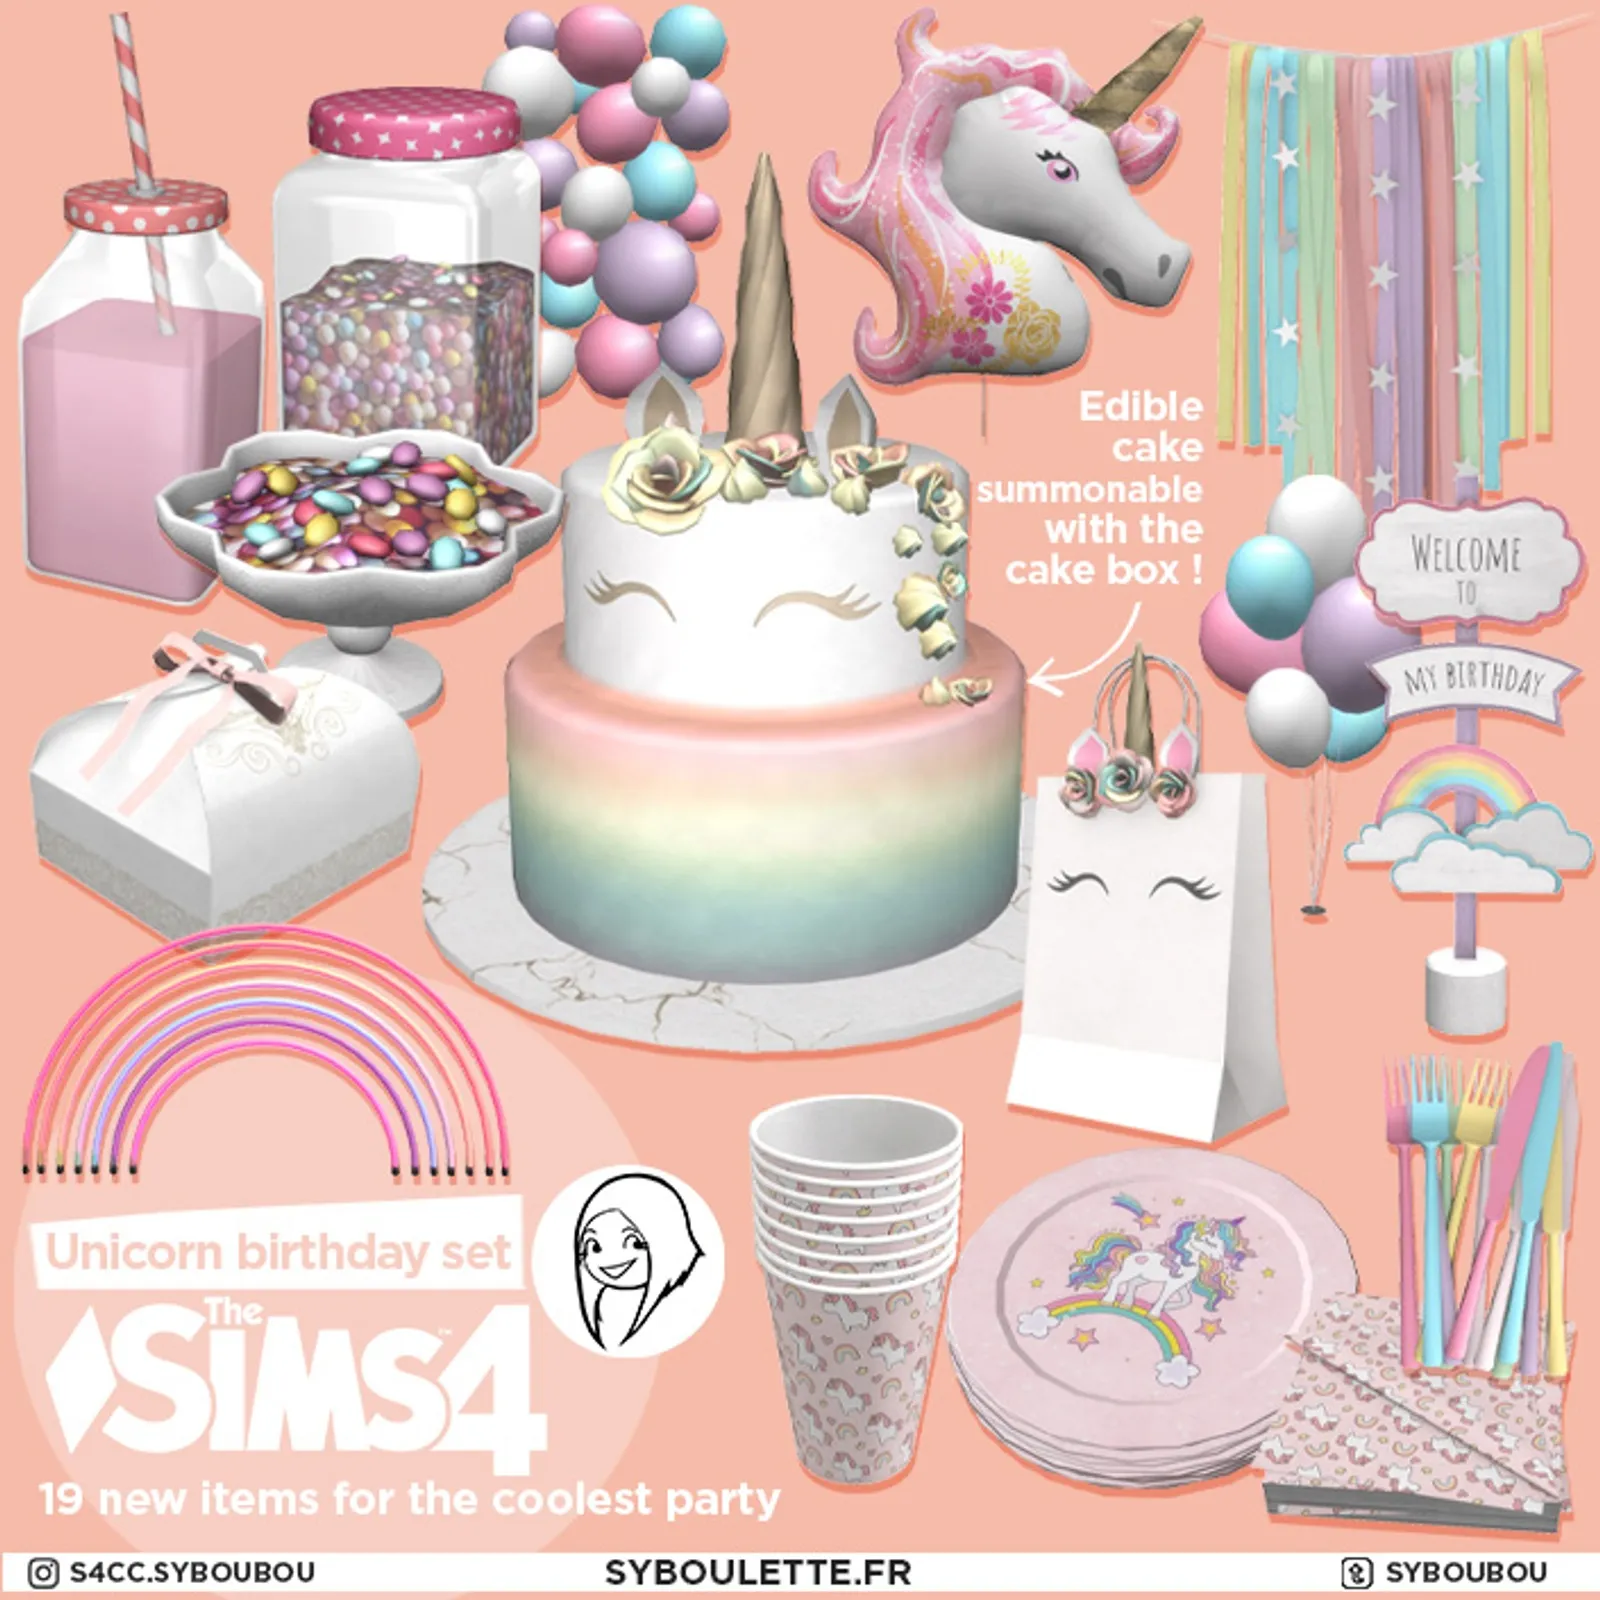 [DOWNLOAD] Unicorn birthday party set